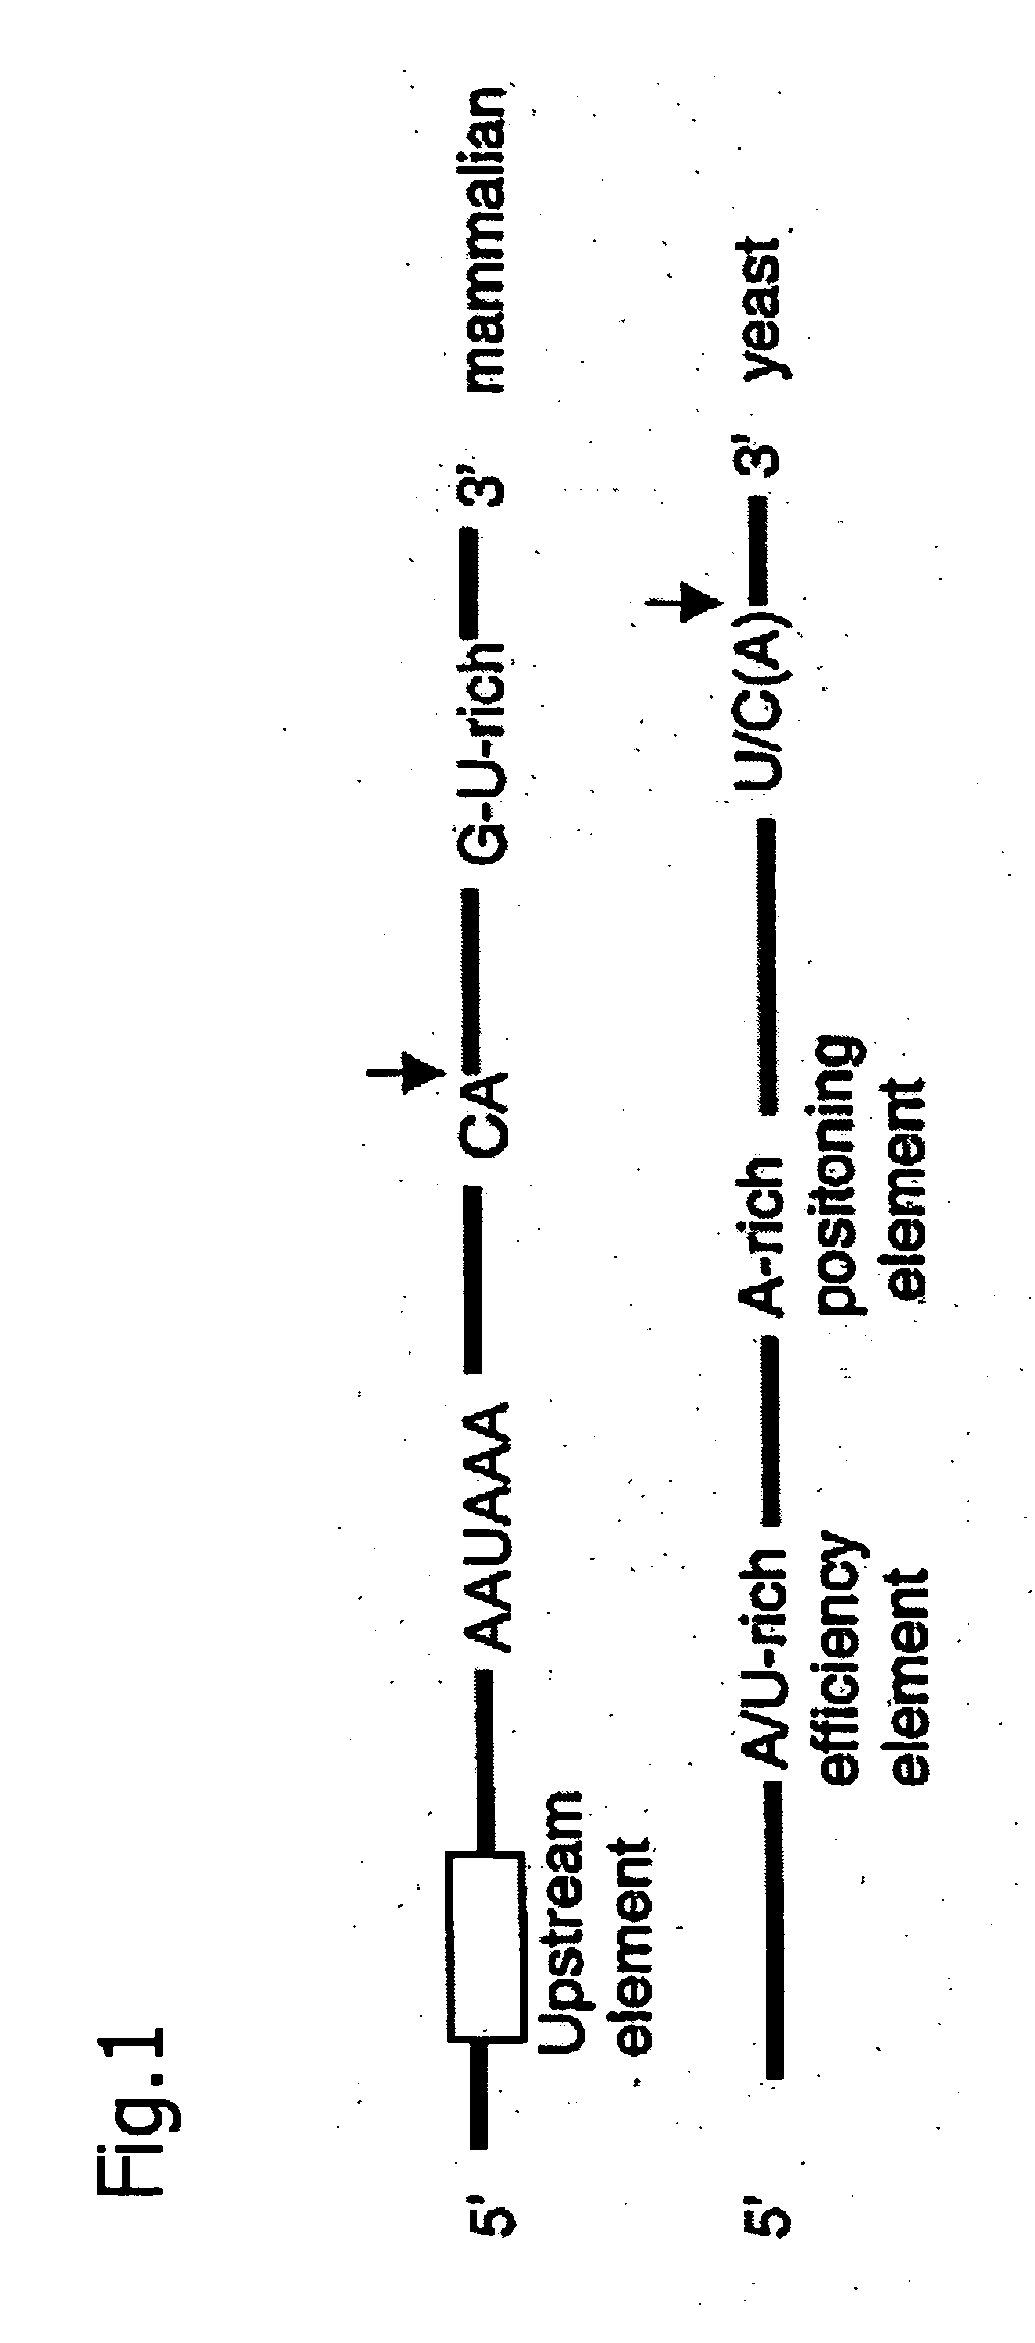 Cleavage and polyadenylation complex of precursor mrna